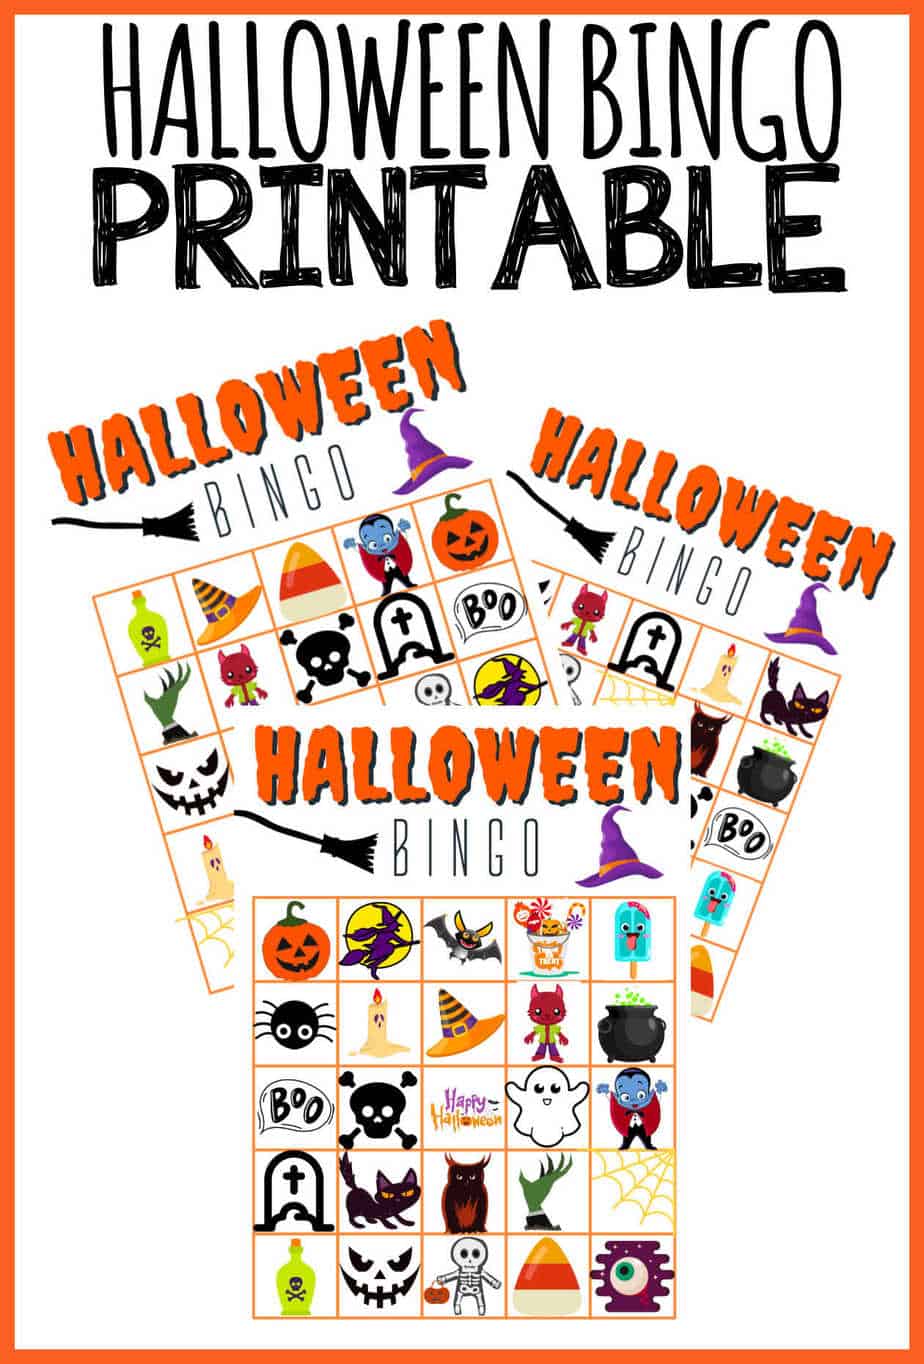 Halloween Bingo printable game